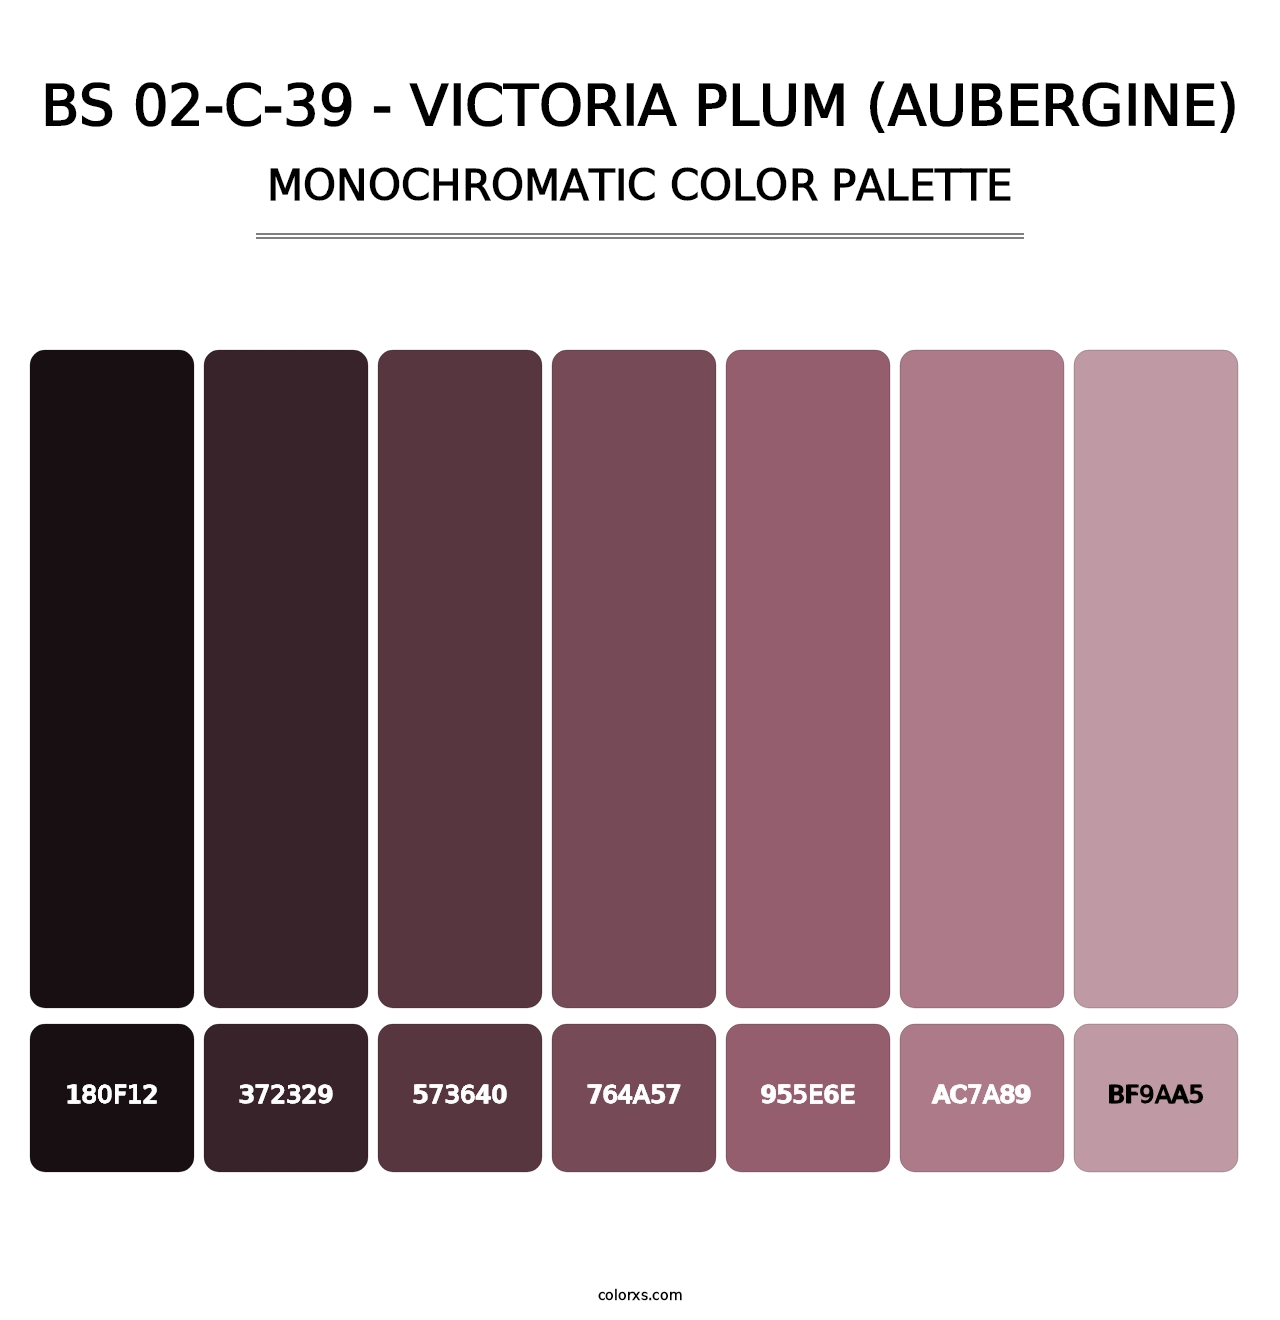 BS 02-C-39 - Victoria Plum (Aubergine) - Monochromatic Color Palette